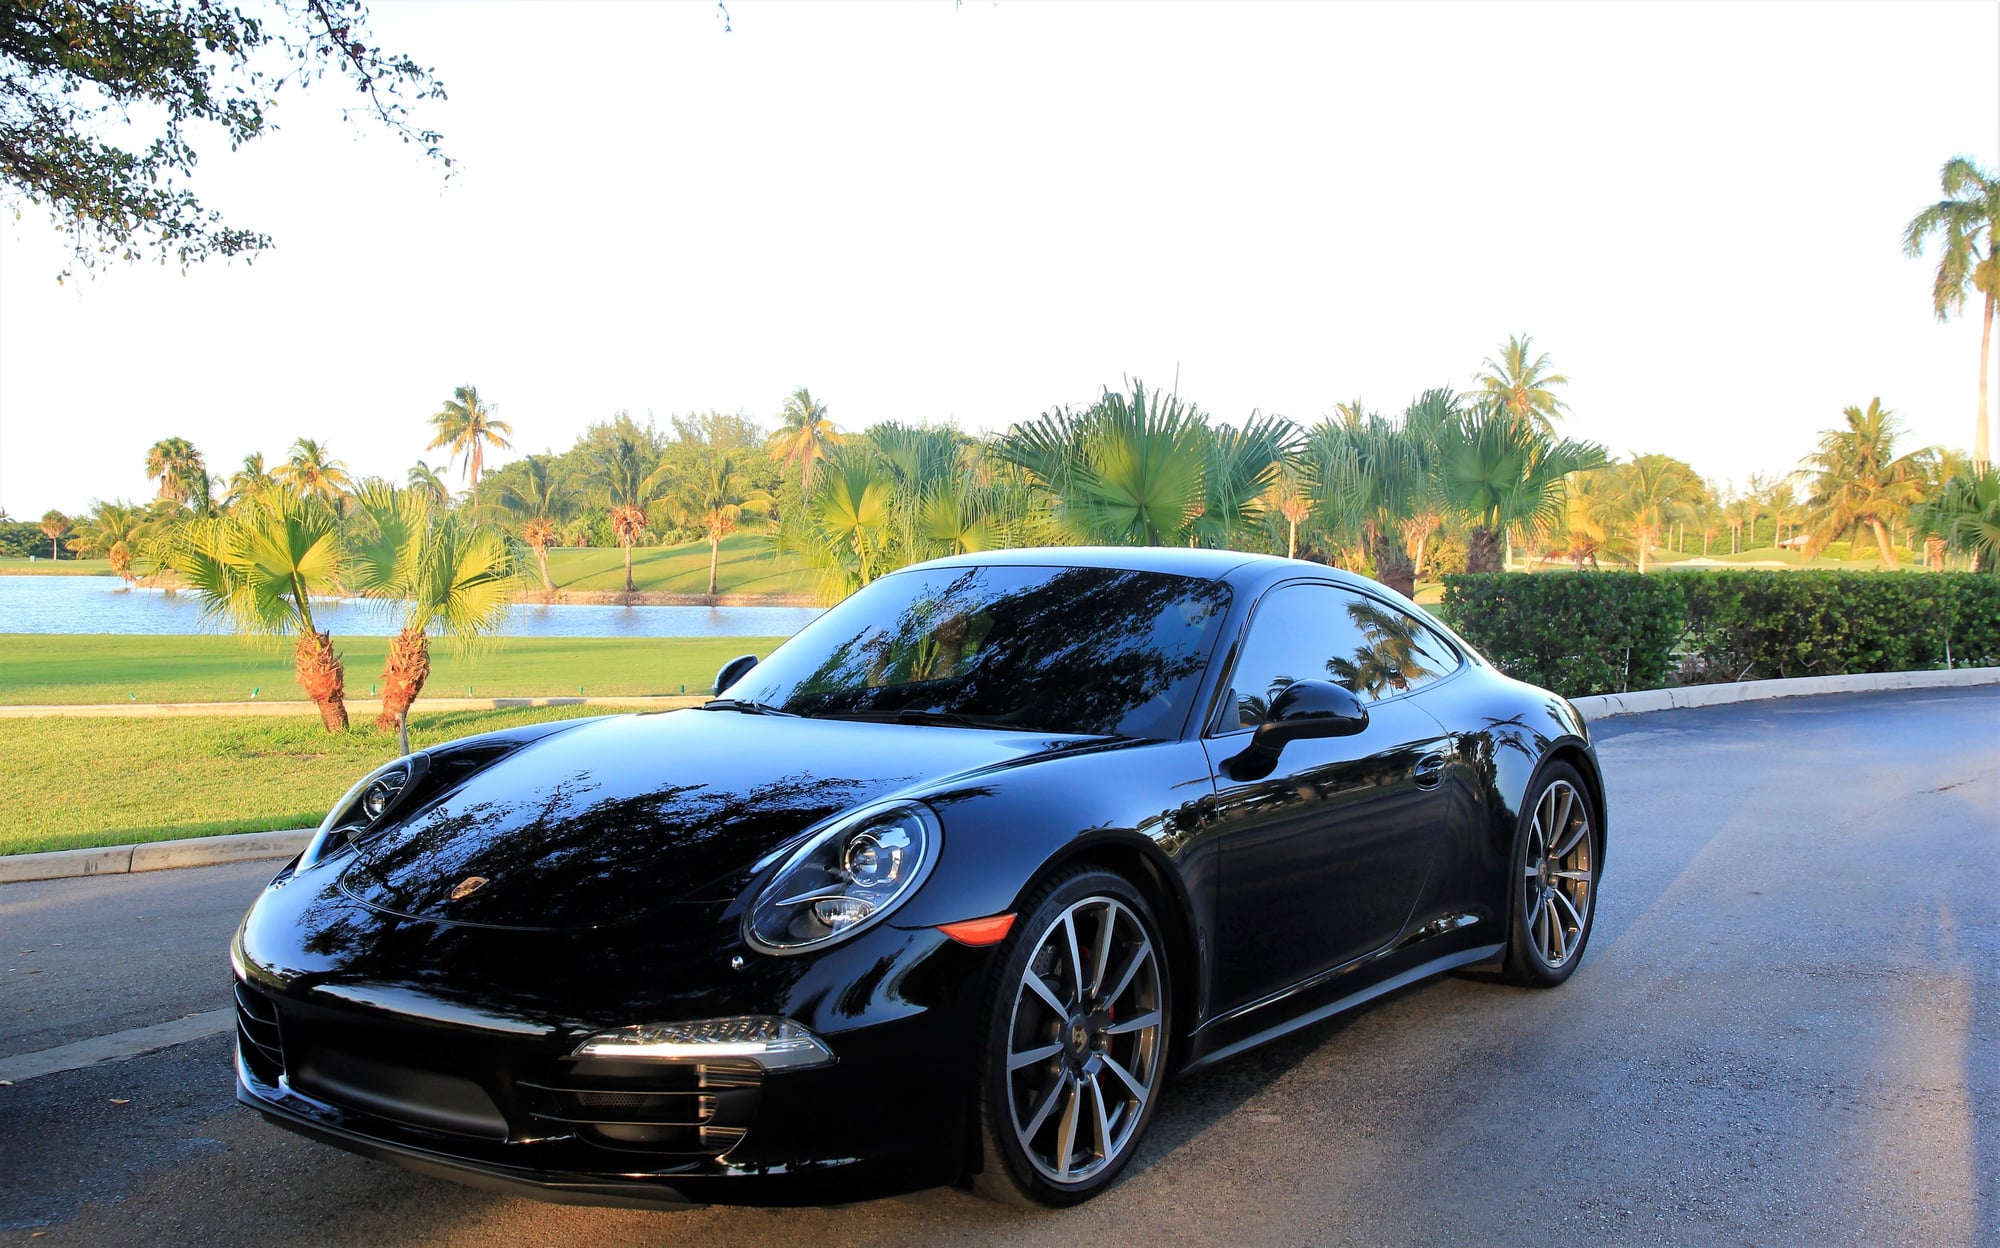 2014 Porsche 911 - 2014 C4S Black/Black FULL LEATHER PDK "sunroof delete" (34k m / 6 m of CPO warranty) - Used - VIN WP0AB2A97ES121563 - 33,600 Miles - 6 cyl - AWD - Automatic - Coupe - Black - Miami, FL 33131, United States